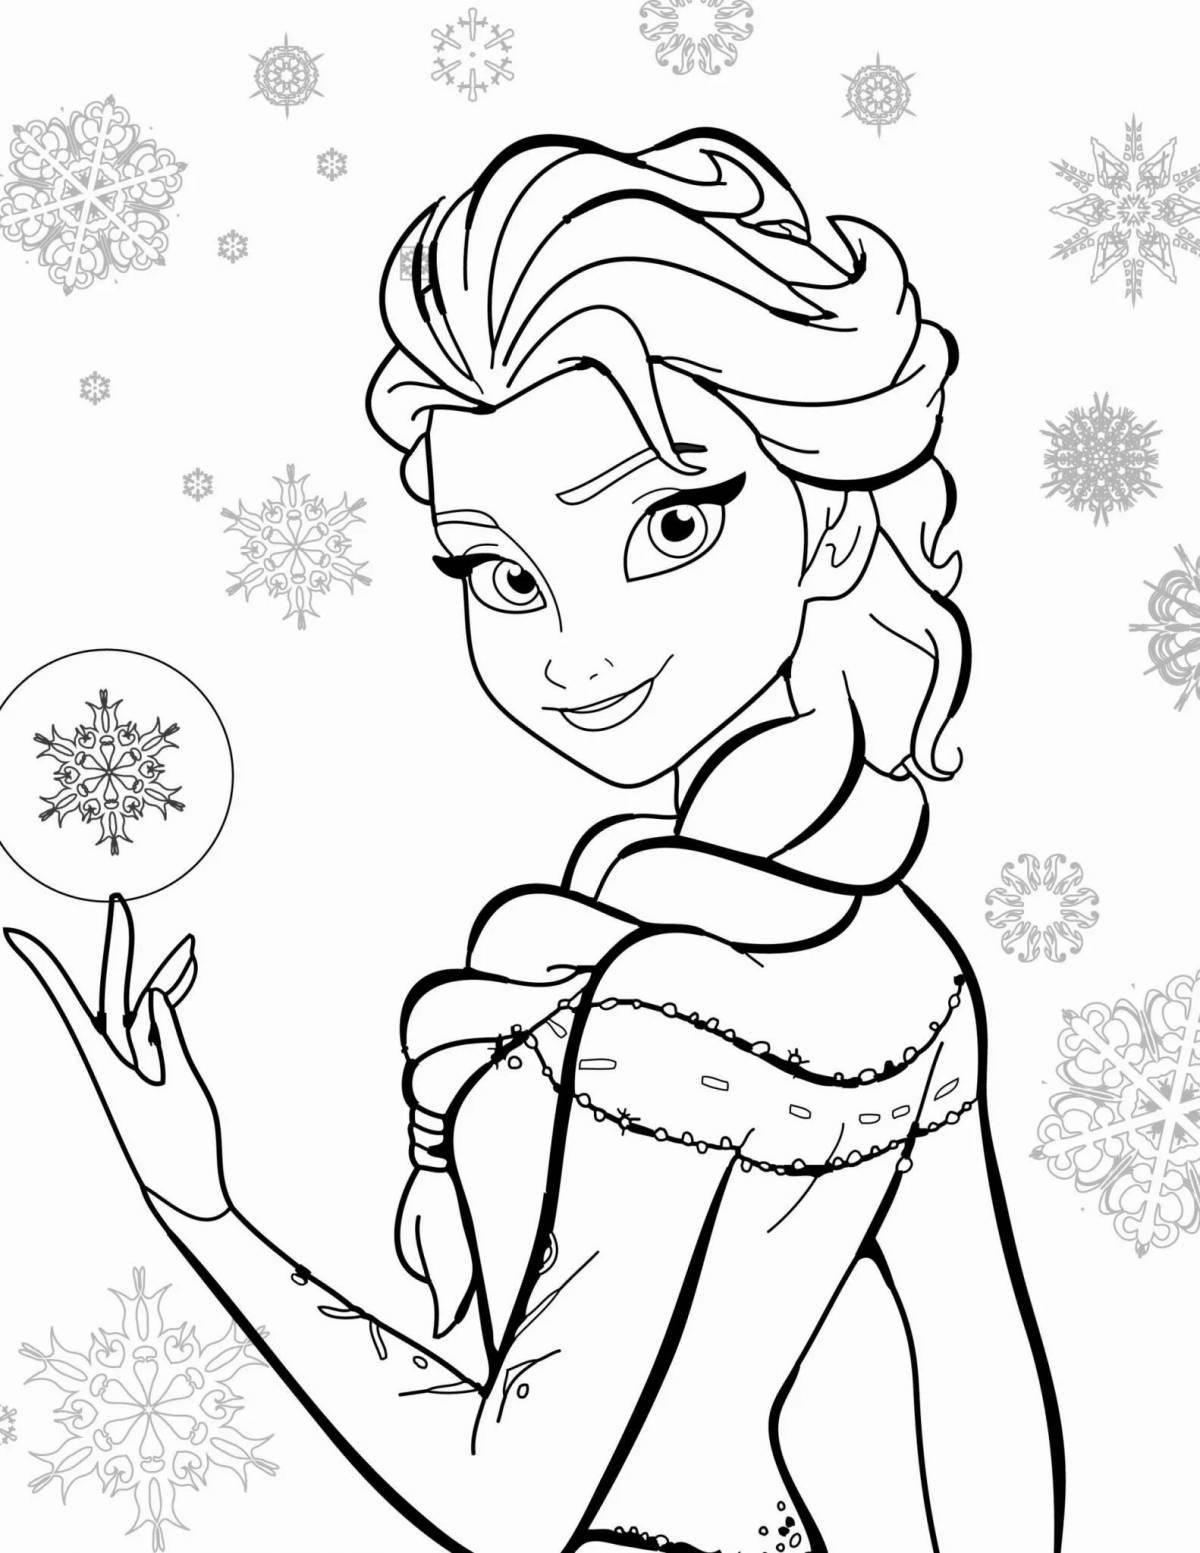 Elsa drawing #2